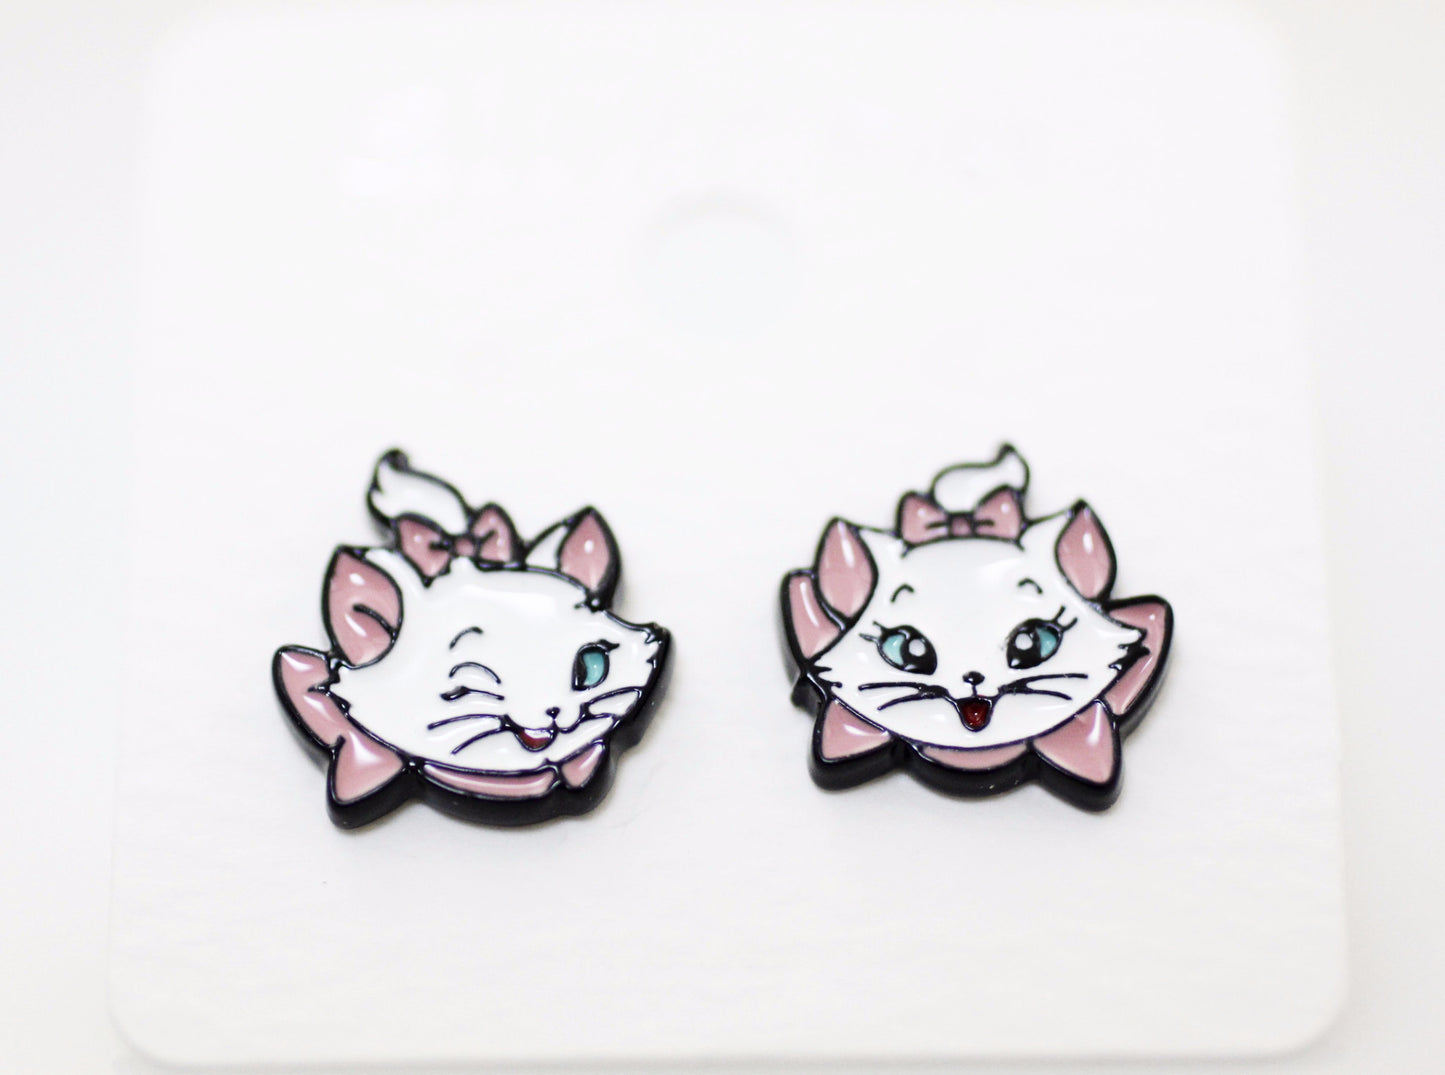 Cute Disney characters earrings Marie cat earrings